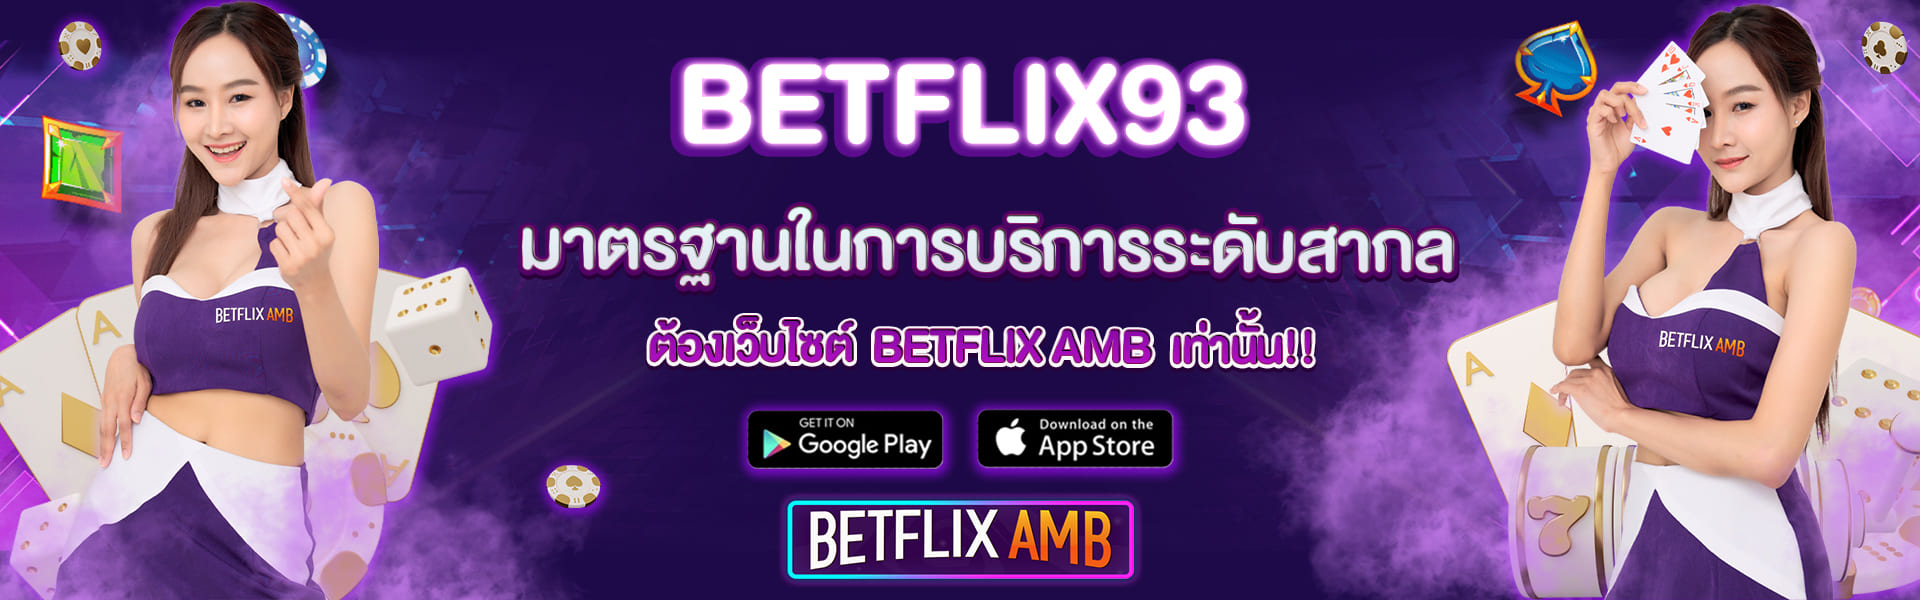 BETFLIX93